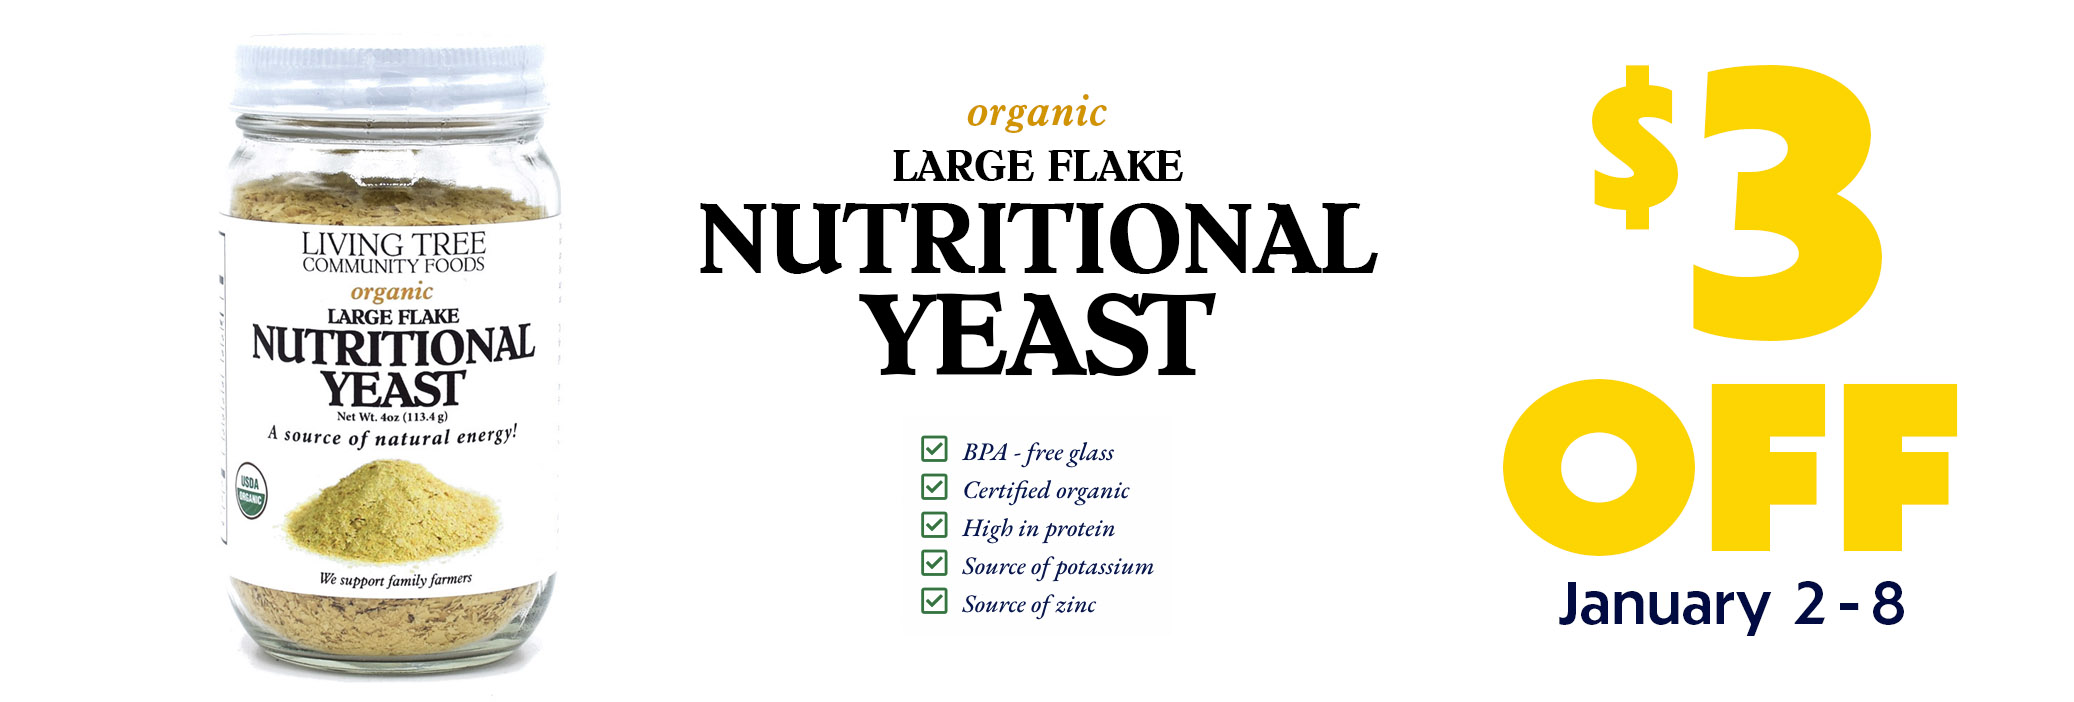 Nutritional Yeast Weekly Sale Banner